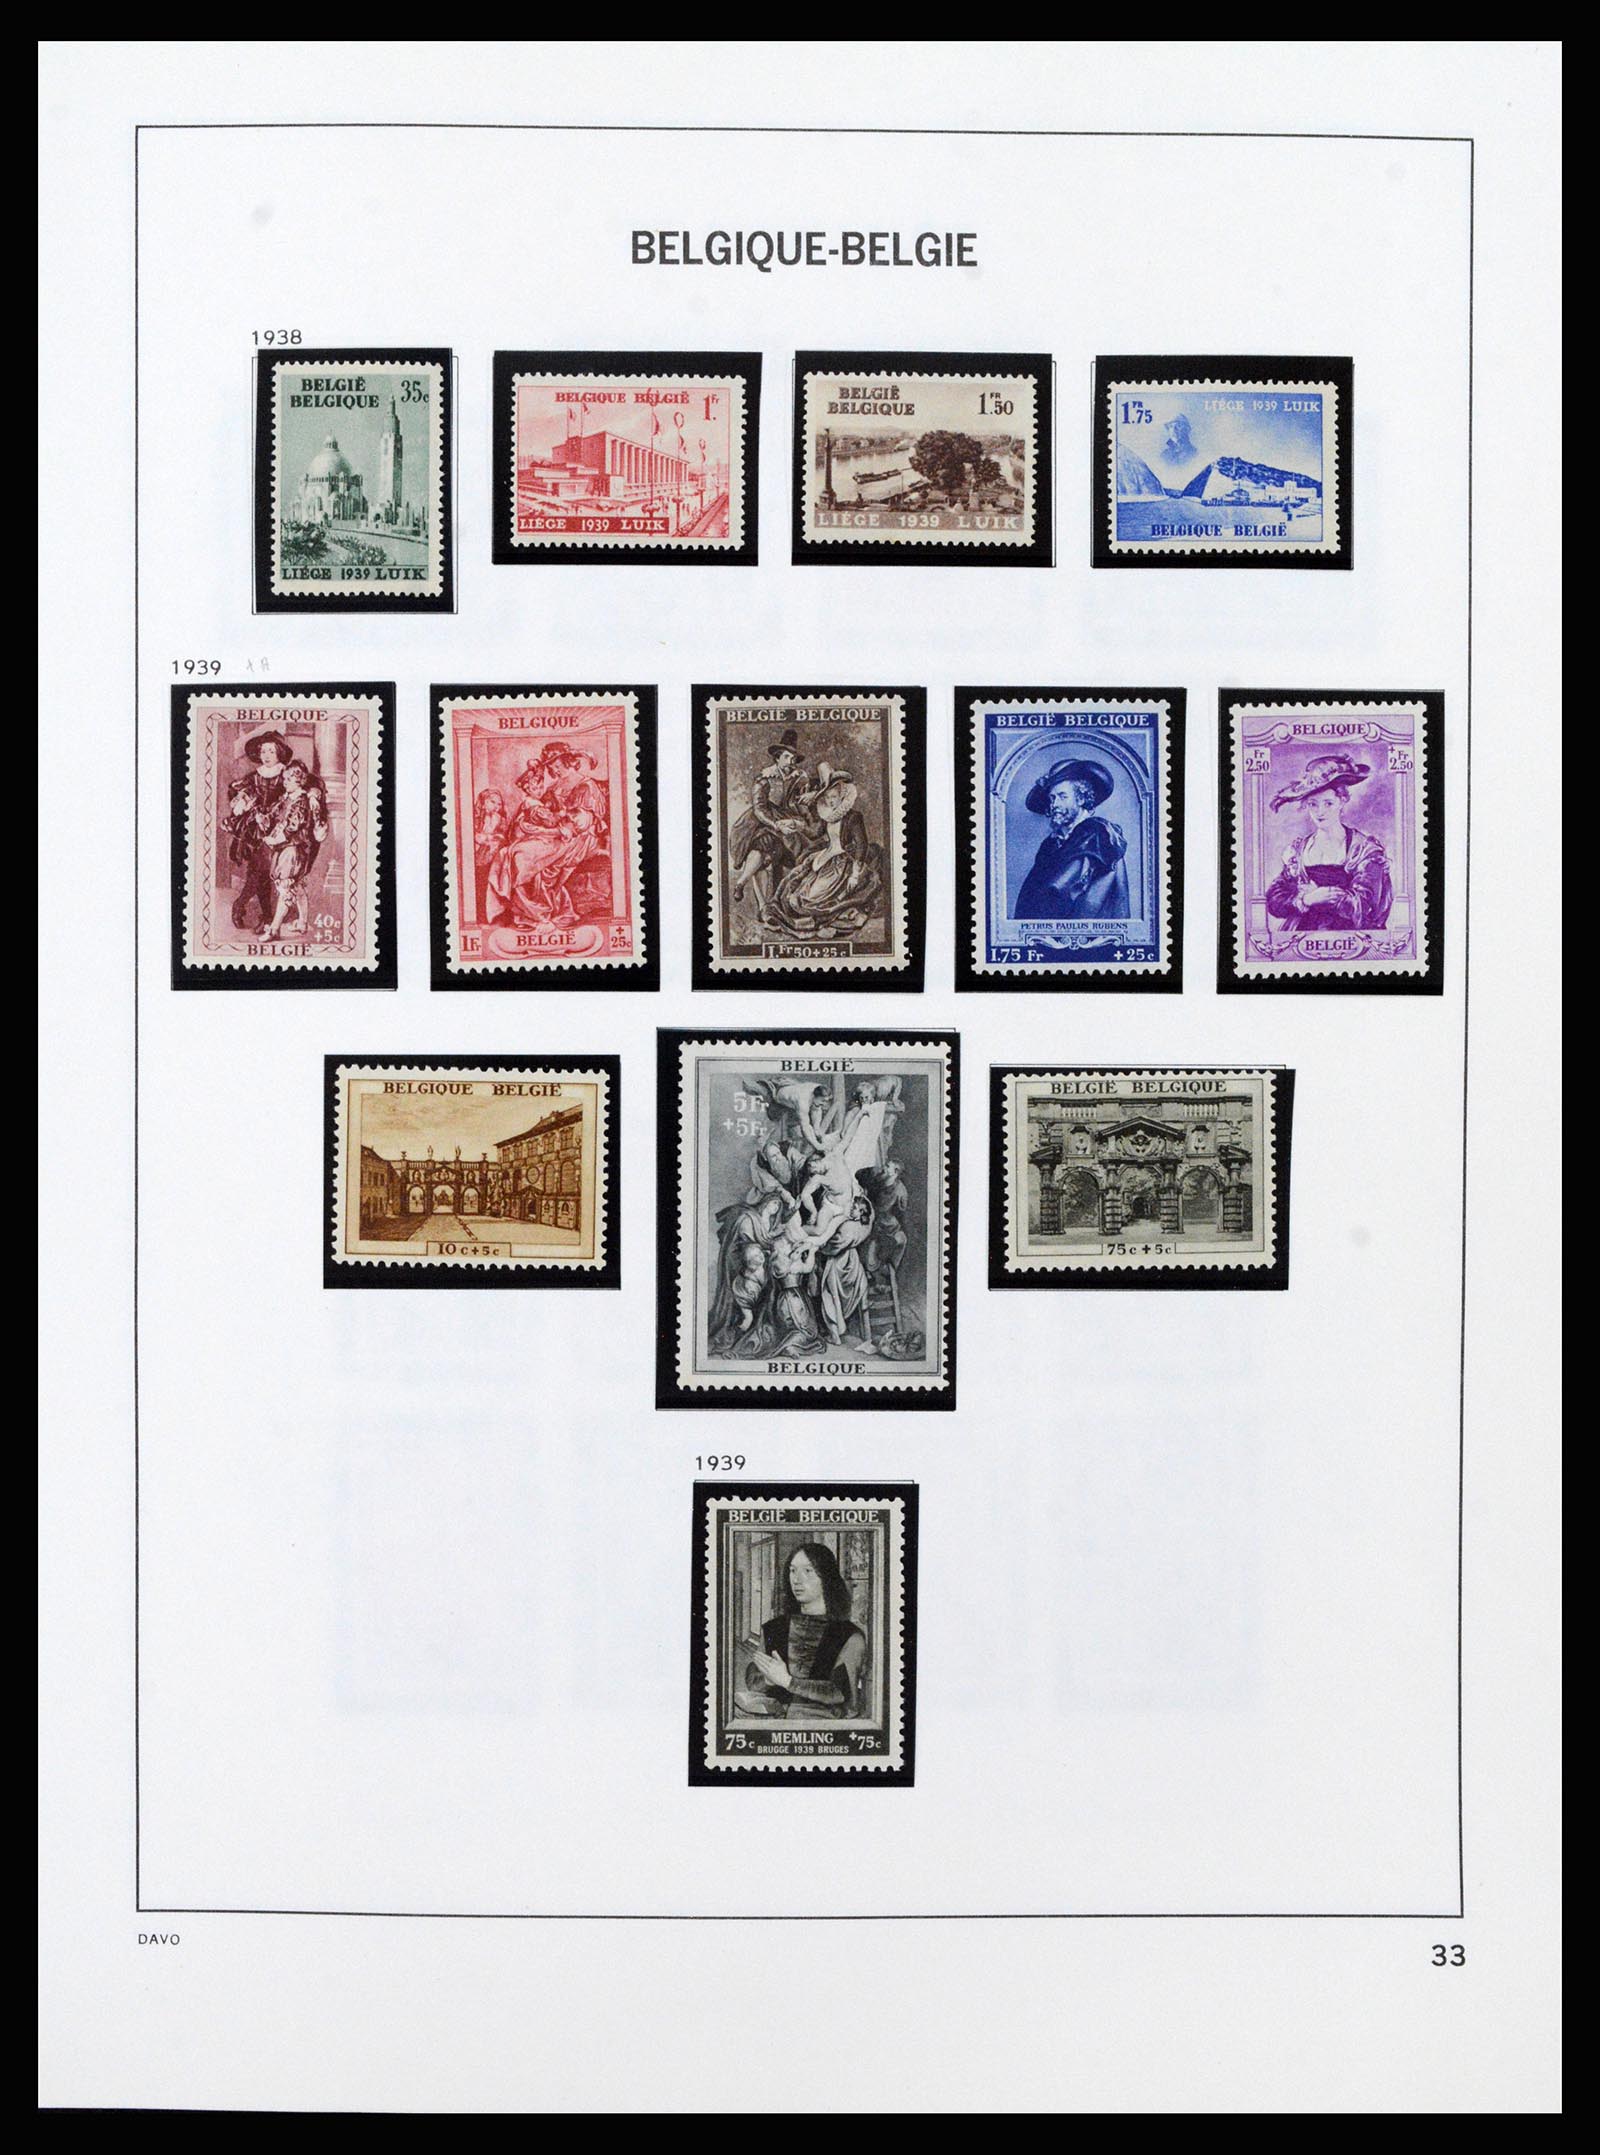 37189 034 - Stamp collection 37189 Belgium 1849-2006.